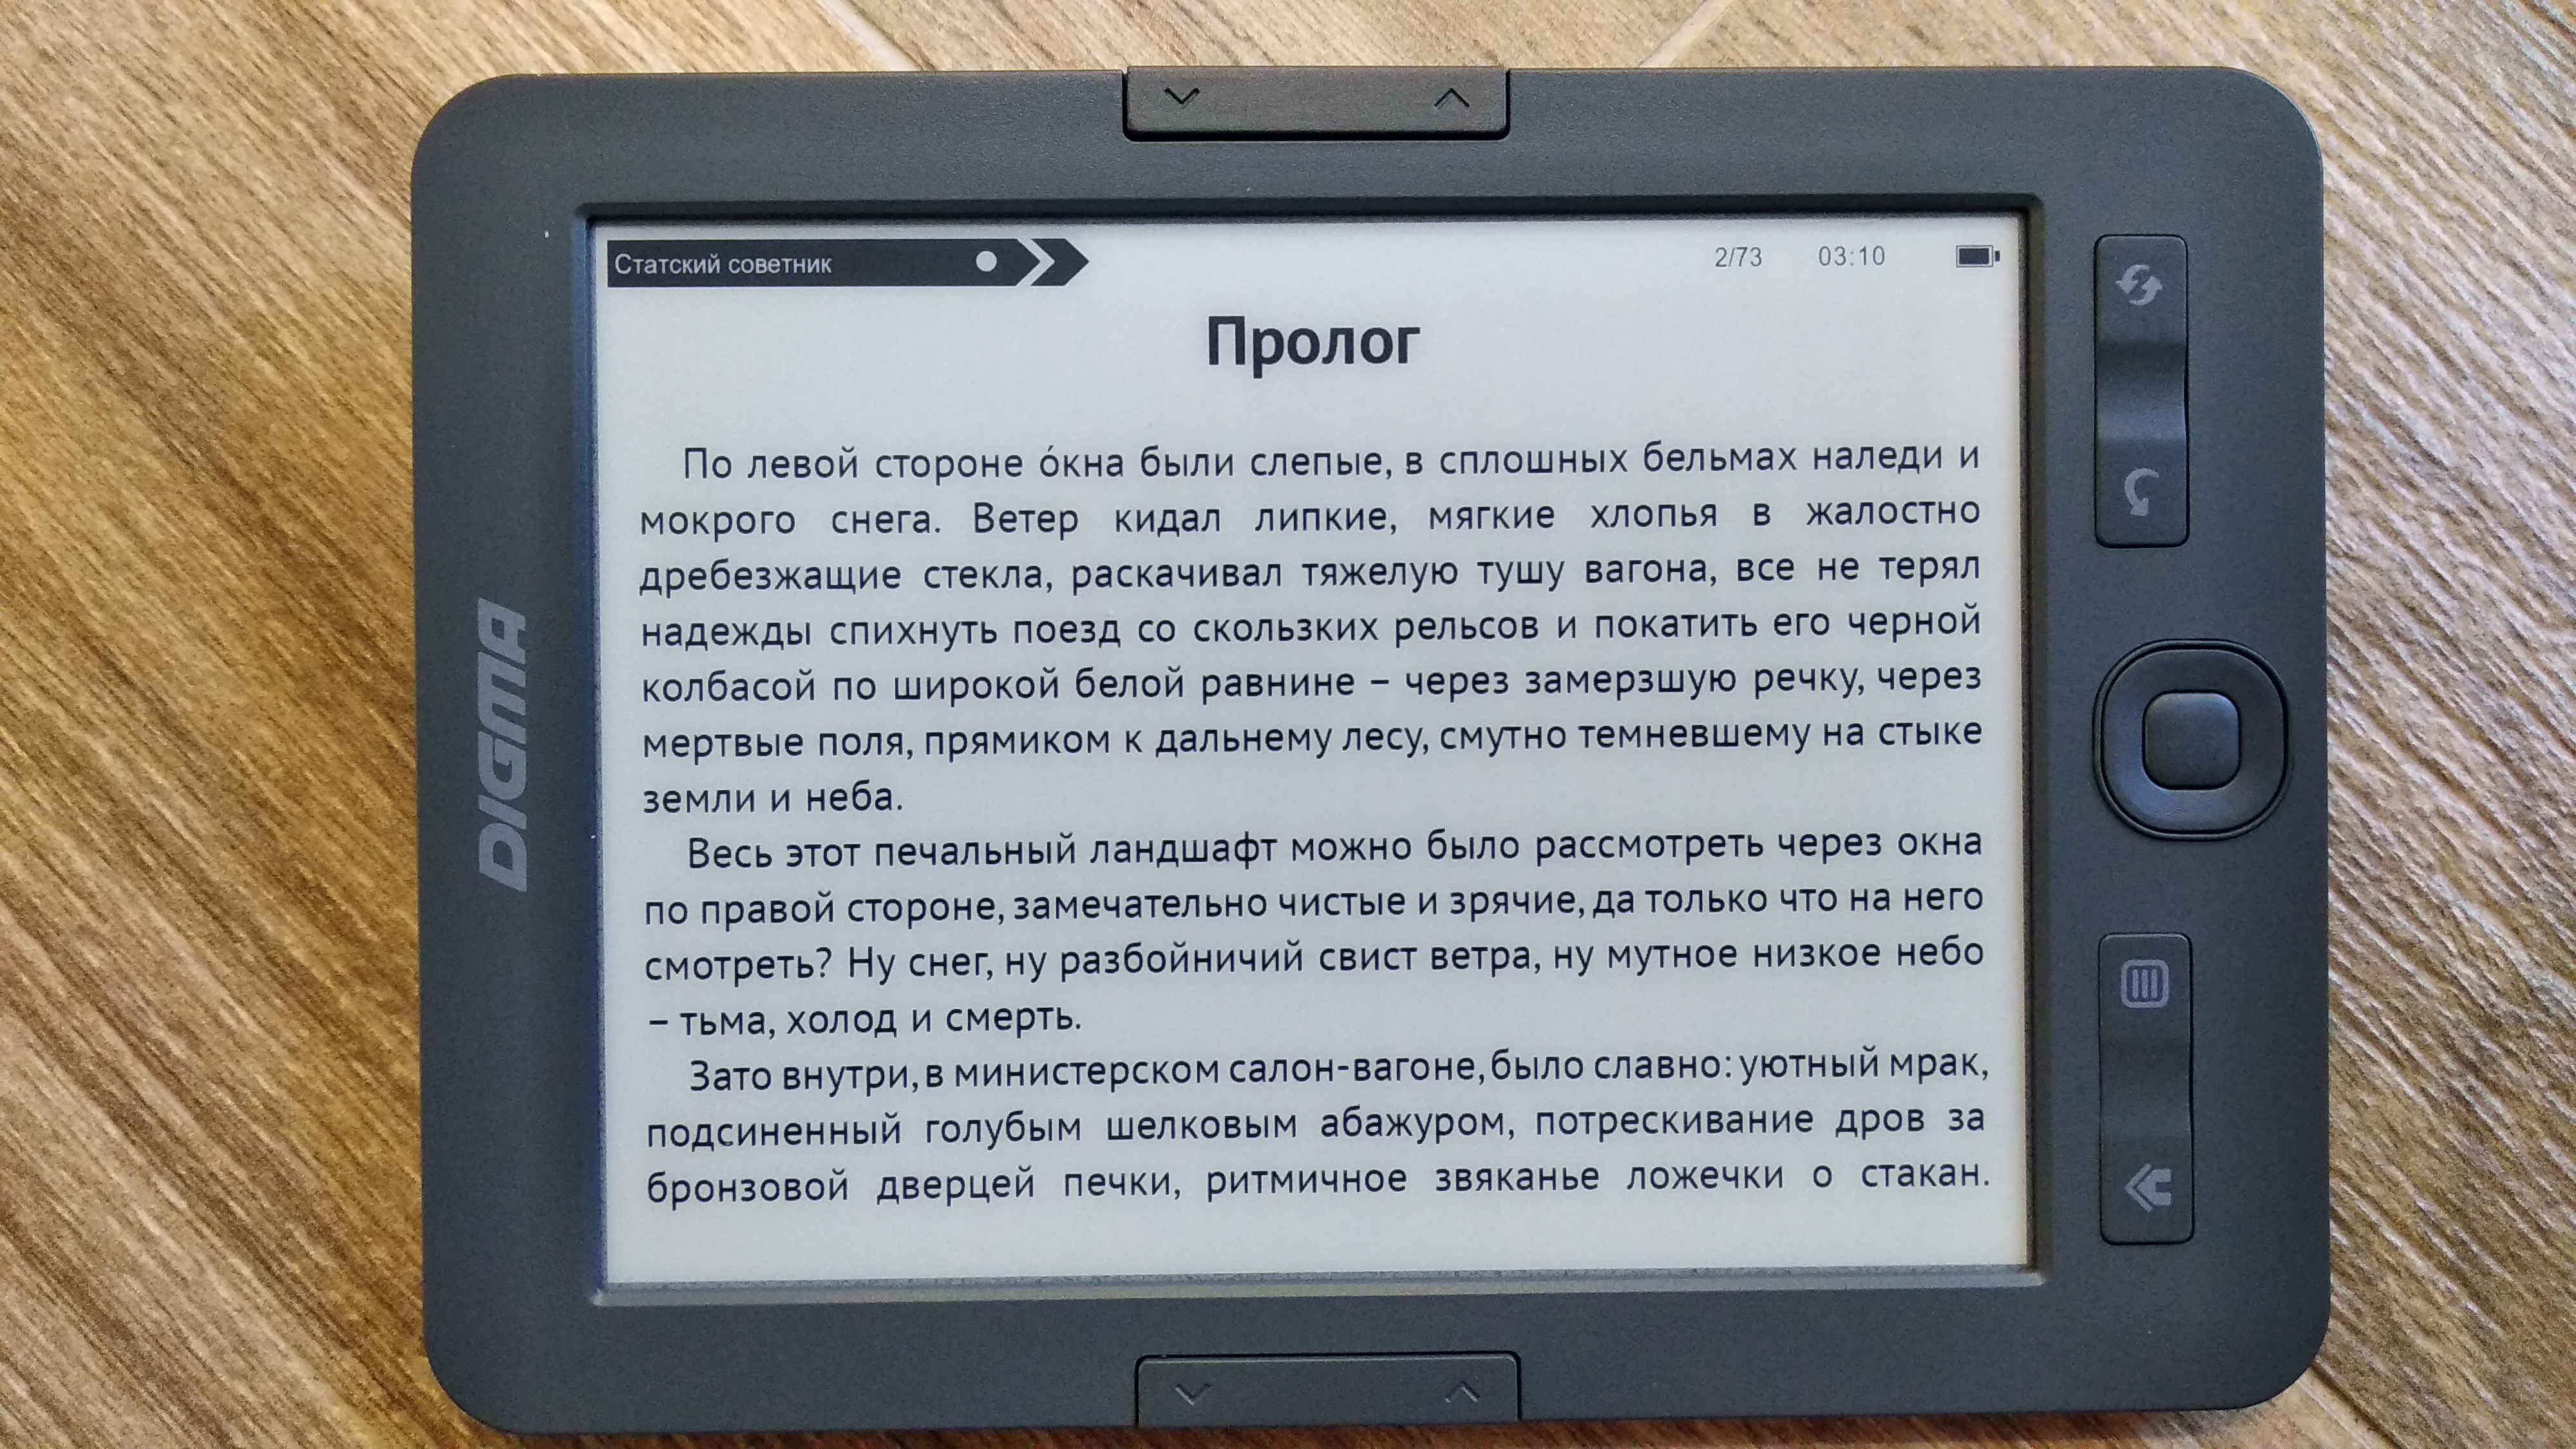 Trekstor ebook reader 3